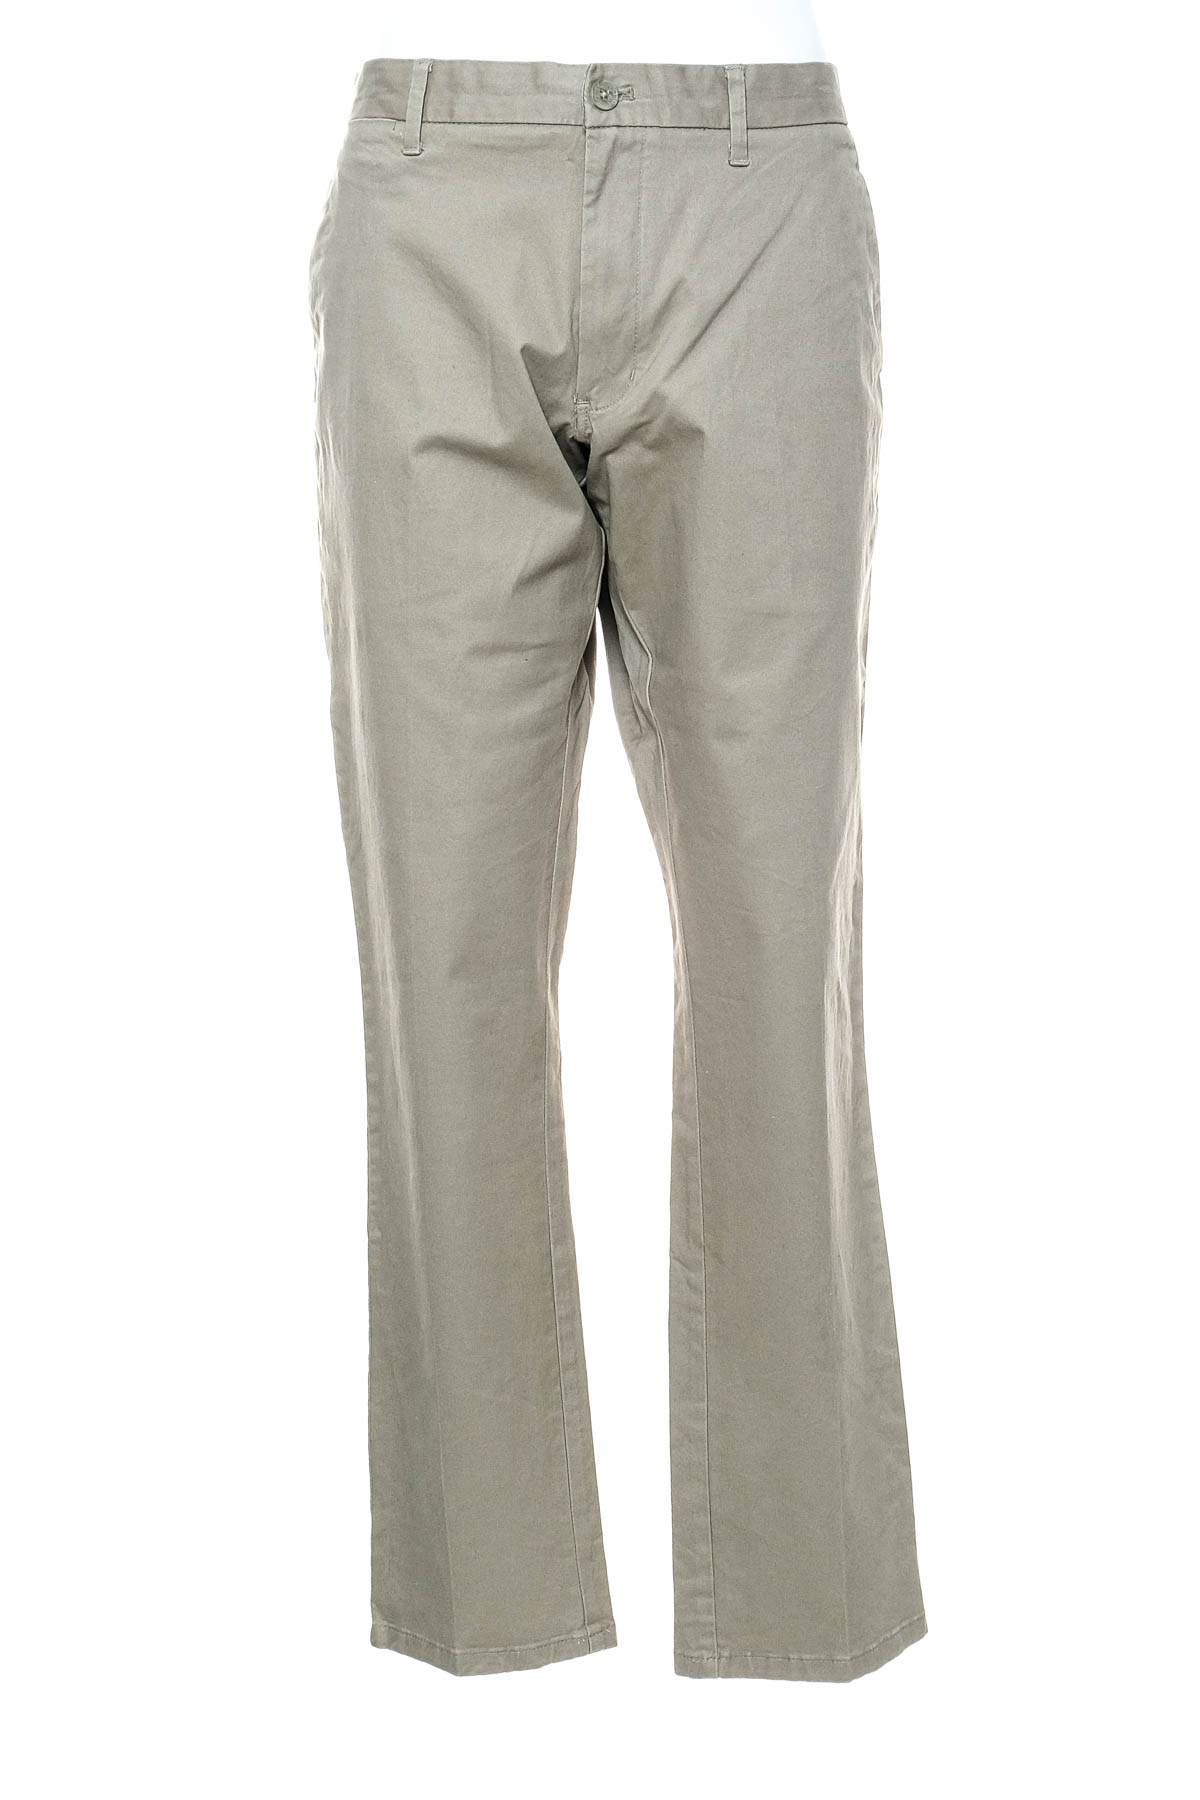 Men's trousers - Calvin Klein - 0